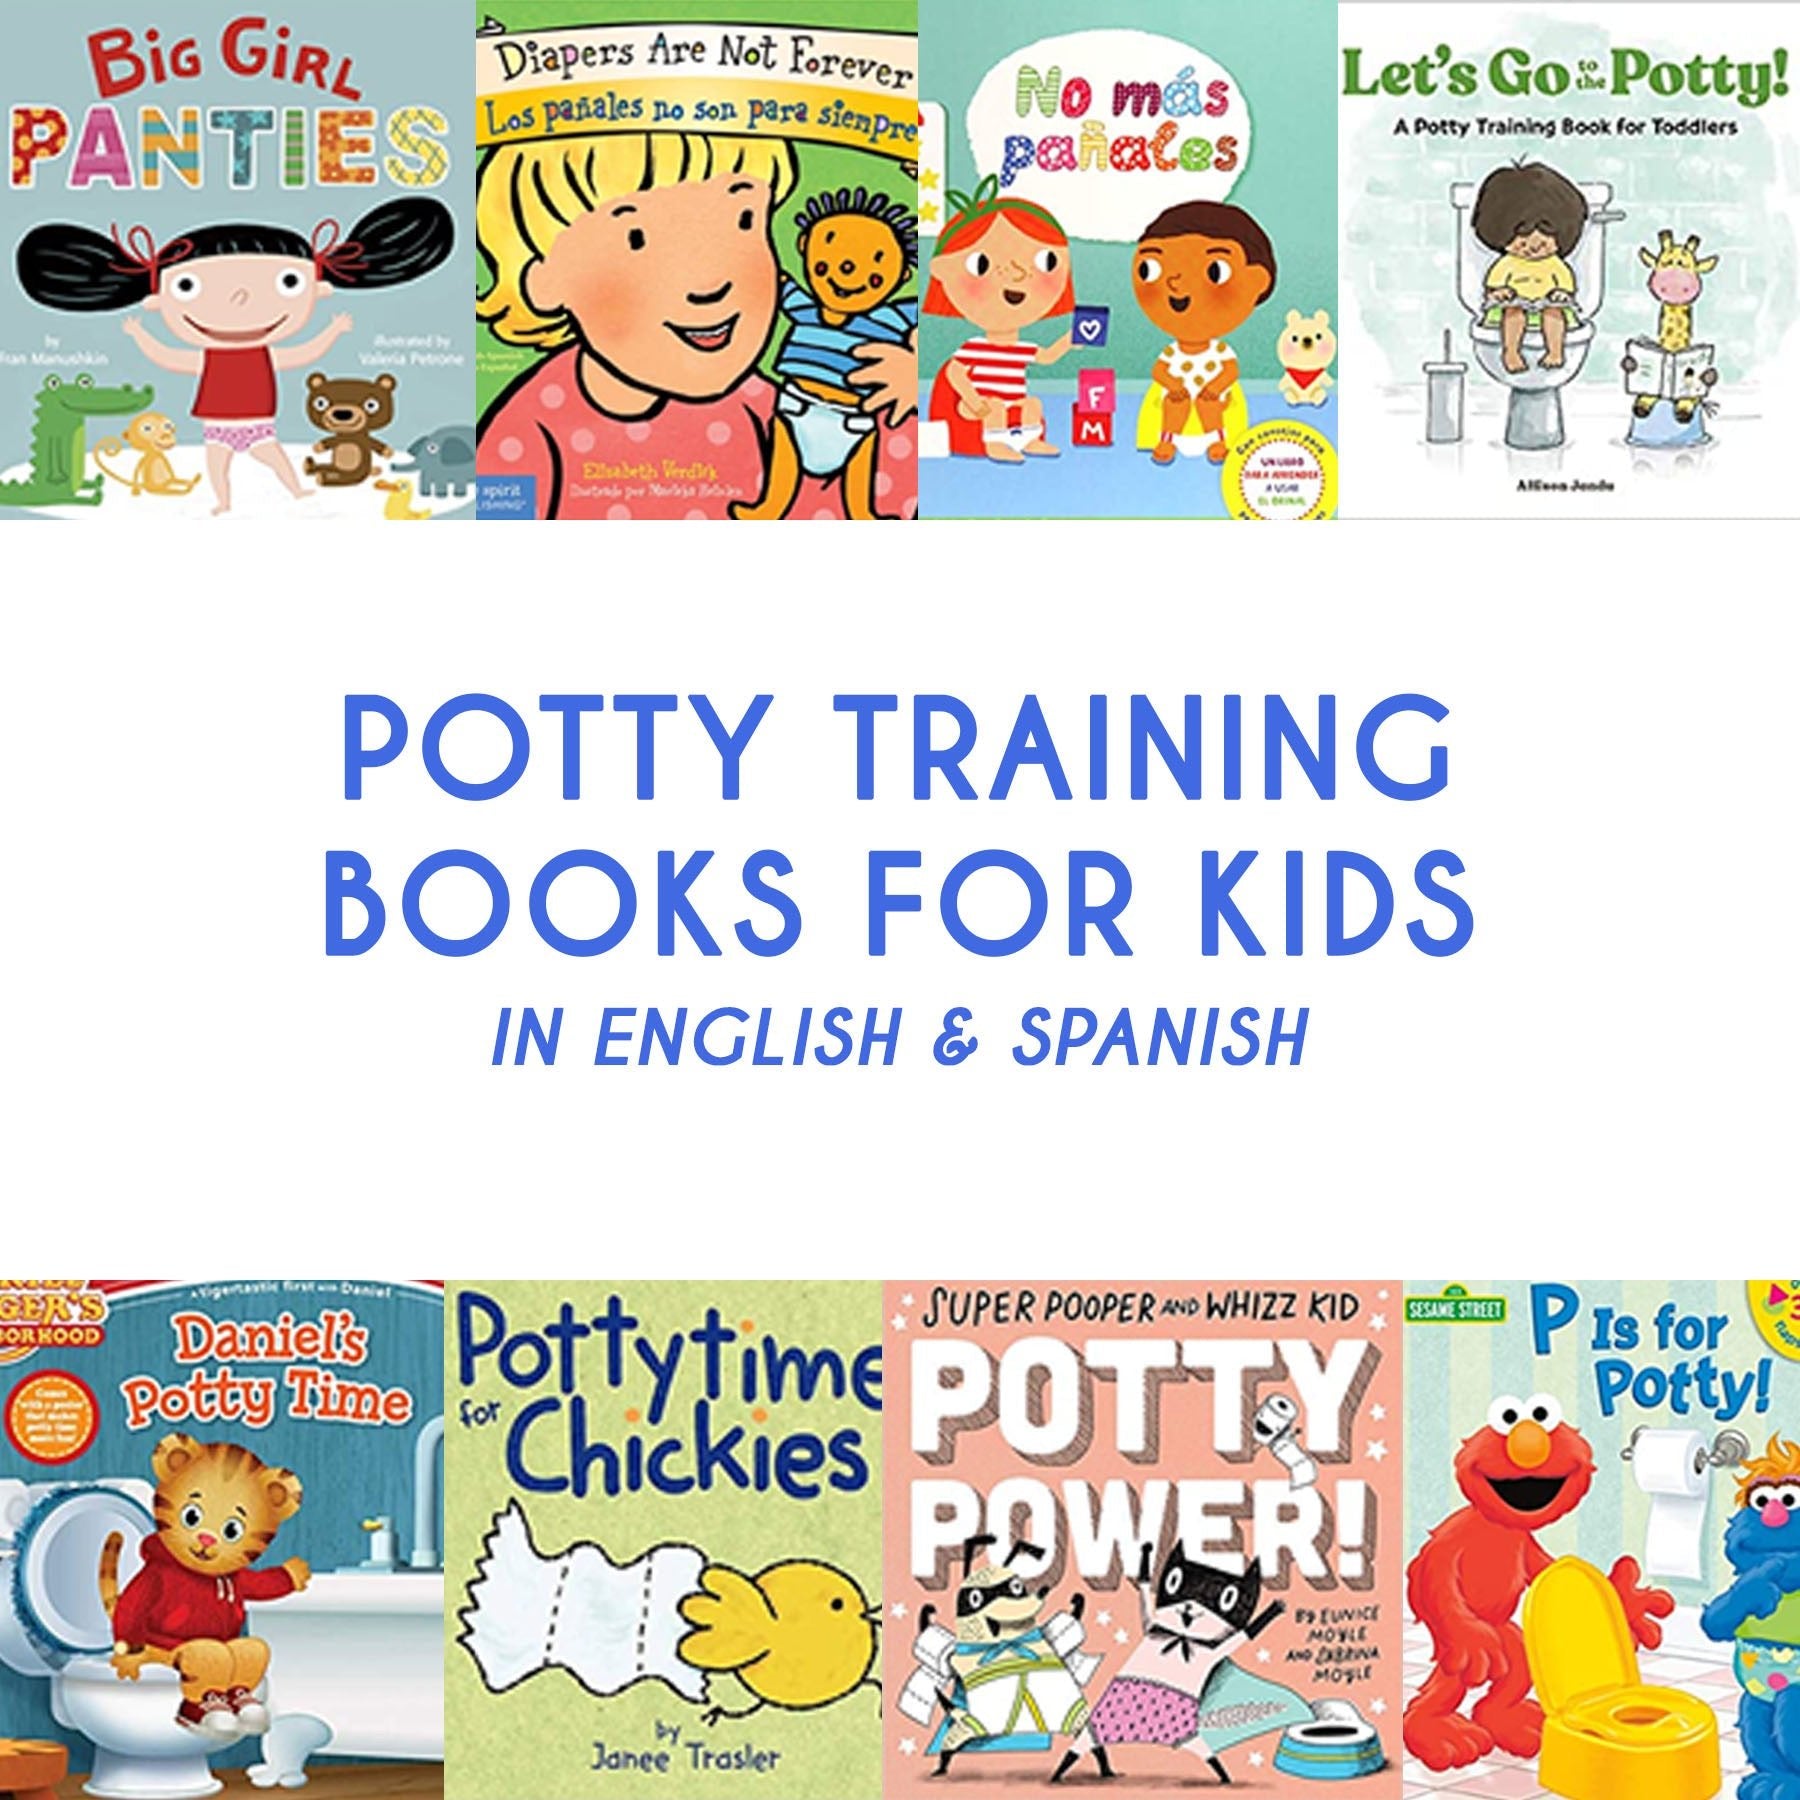 Kids Potty Training Books in Spanish and English - Mi LegaSi